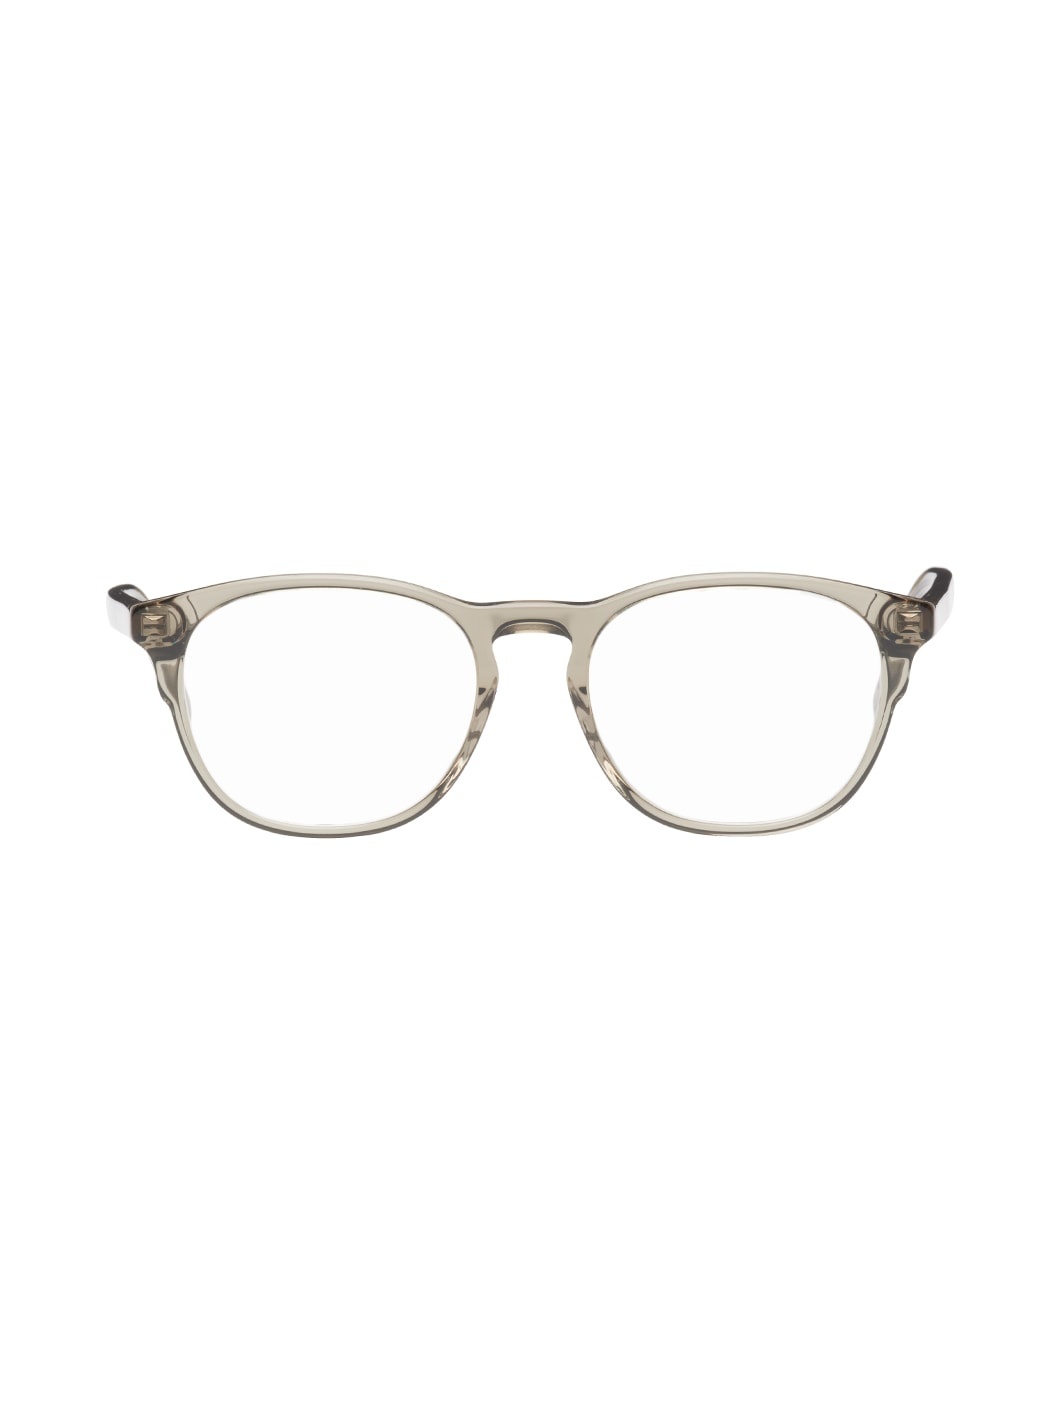 Green Oval Glasses - 1